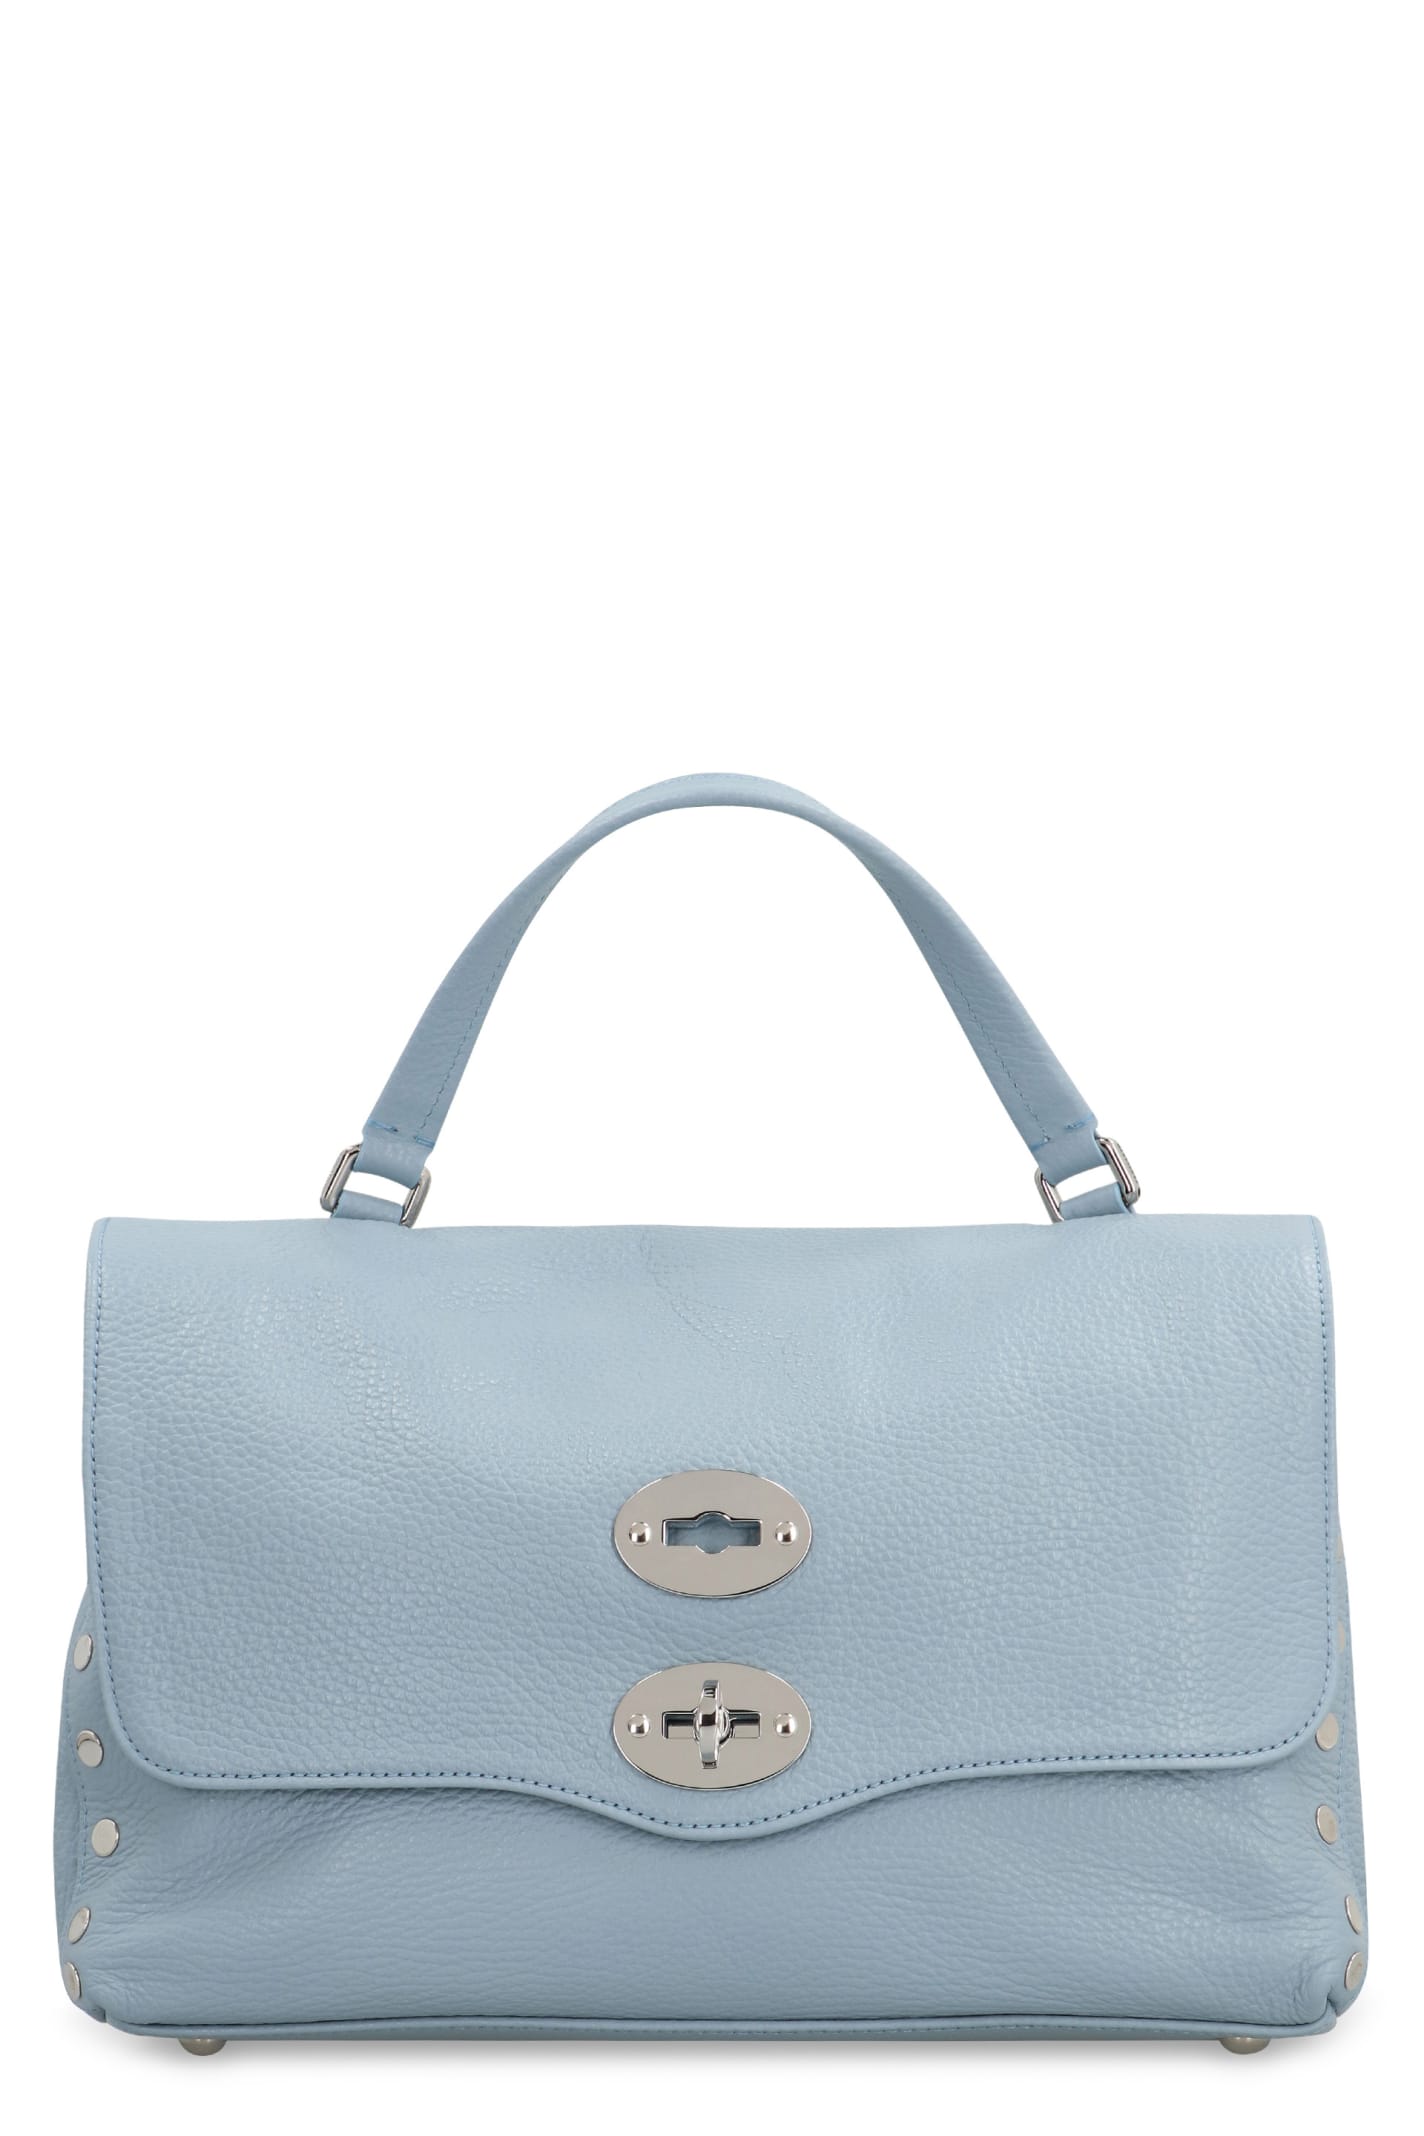 Zanellato Postina S Leather Handbag In Light Blue